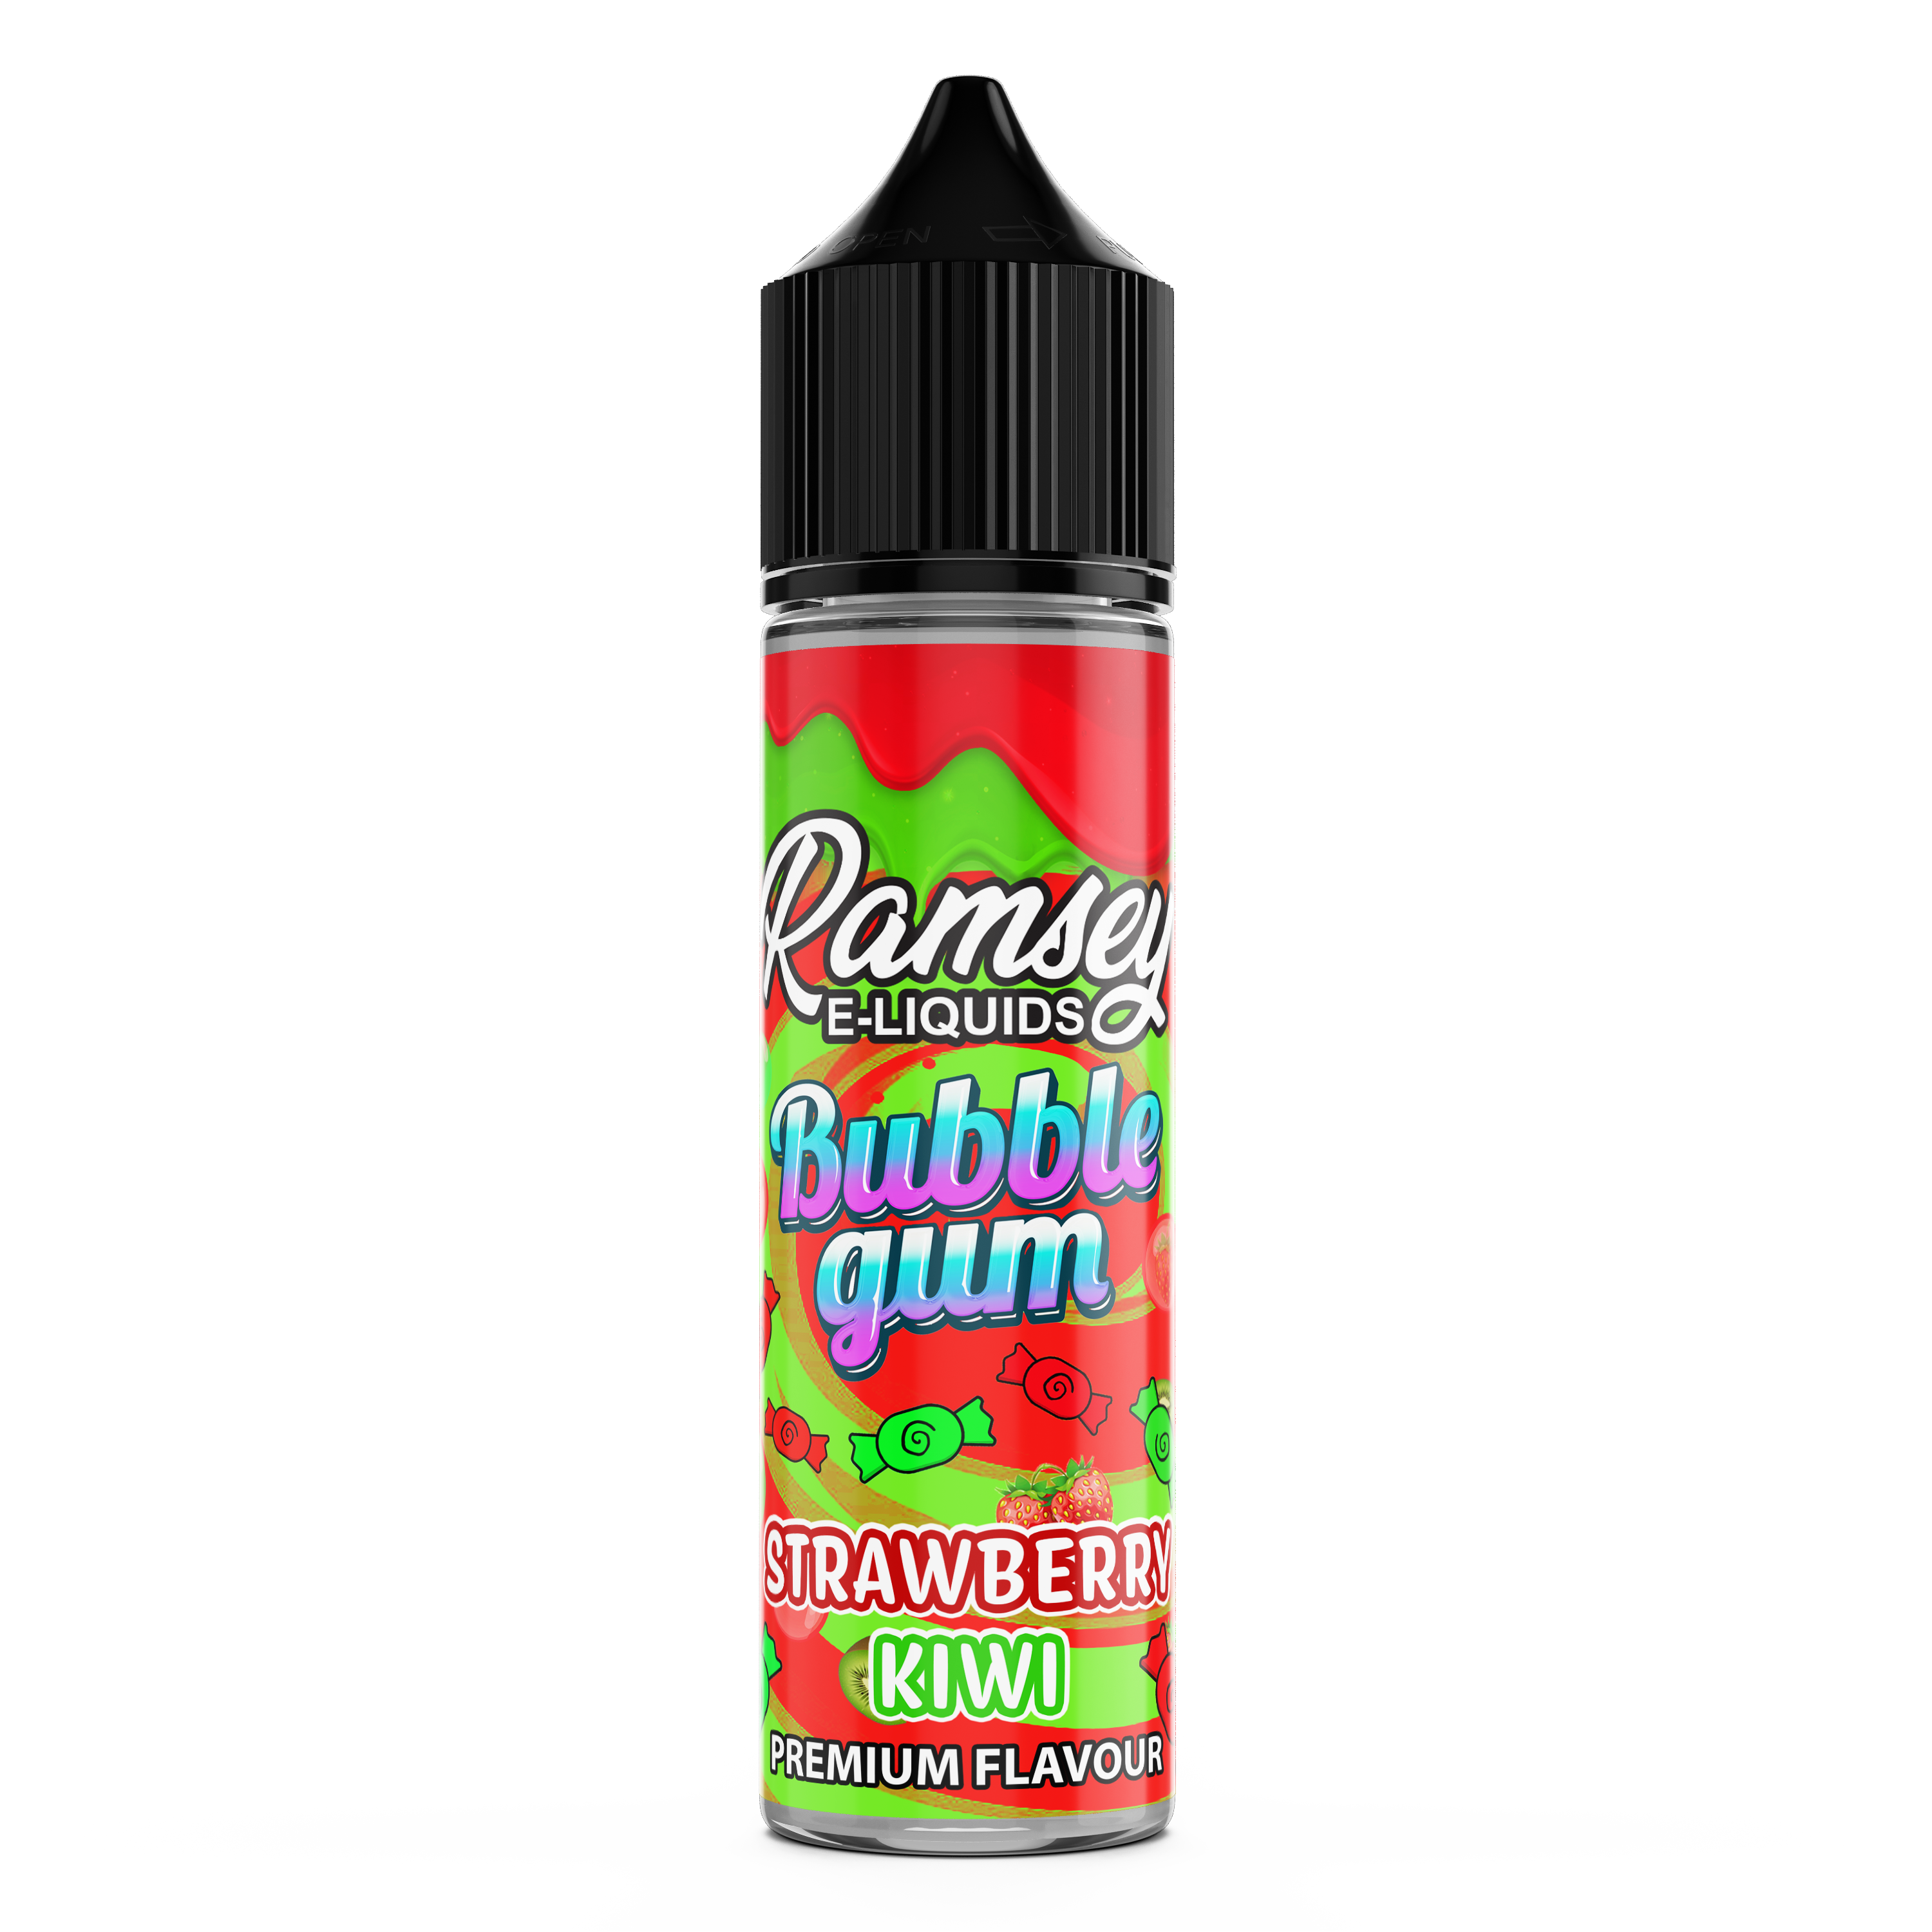 Ramsey E-Liquids Bubblegum Strawberry Kiwi 0mg 50ml Shortfill E-Liquid